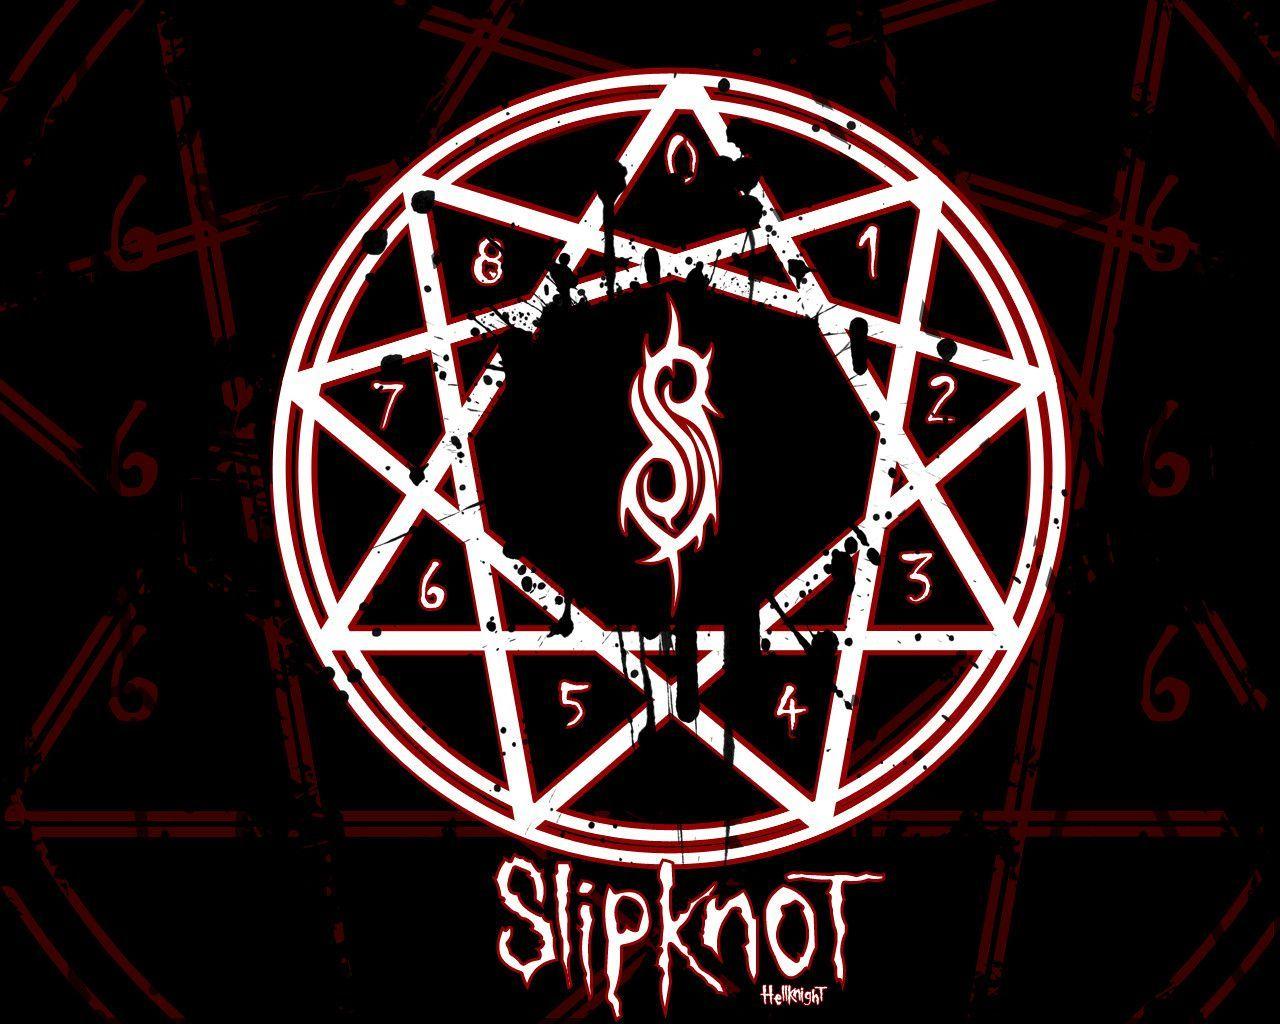 Metal Gods image Slipknot&;s logo HD wallpaper and background